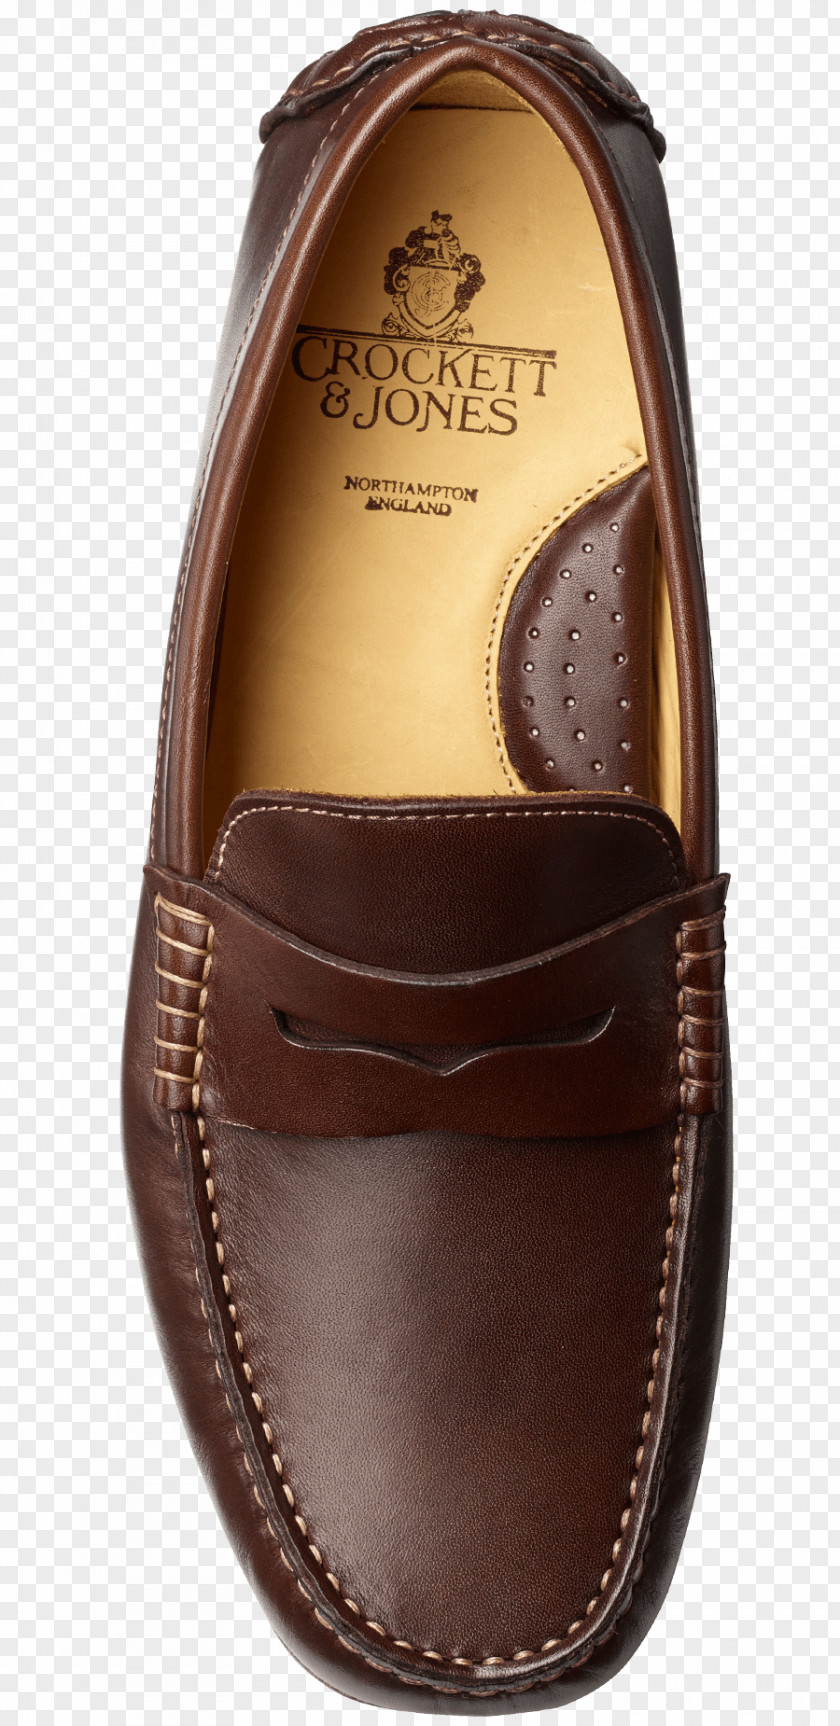 Goodyear Welt Slip-on Shoe Crockett & Jones Leather Calfskin PNG